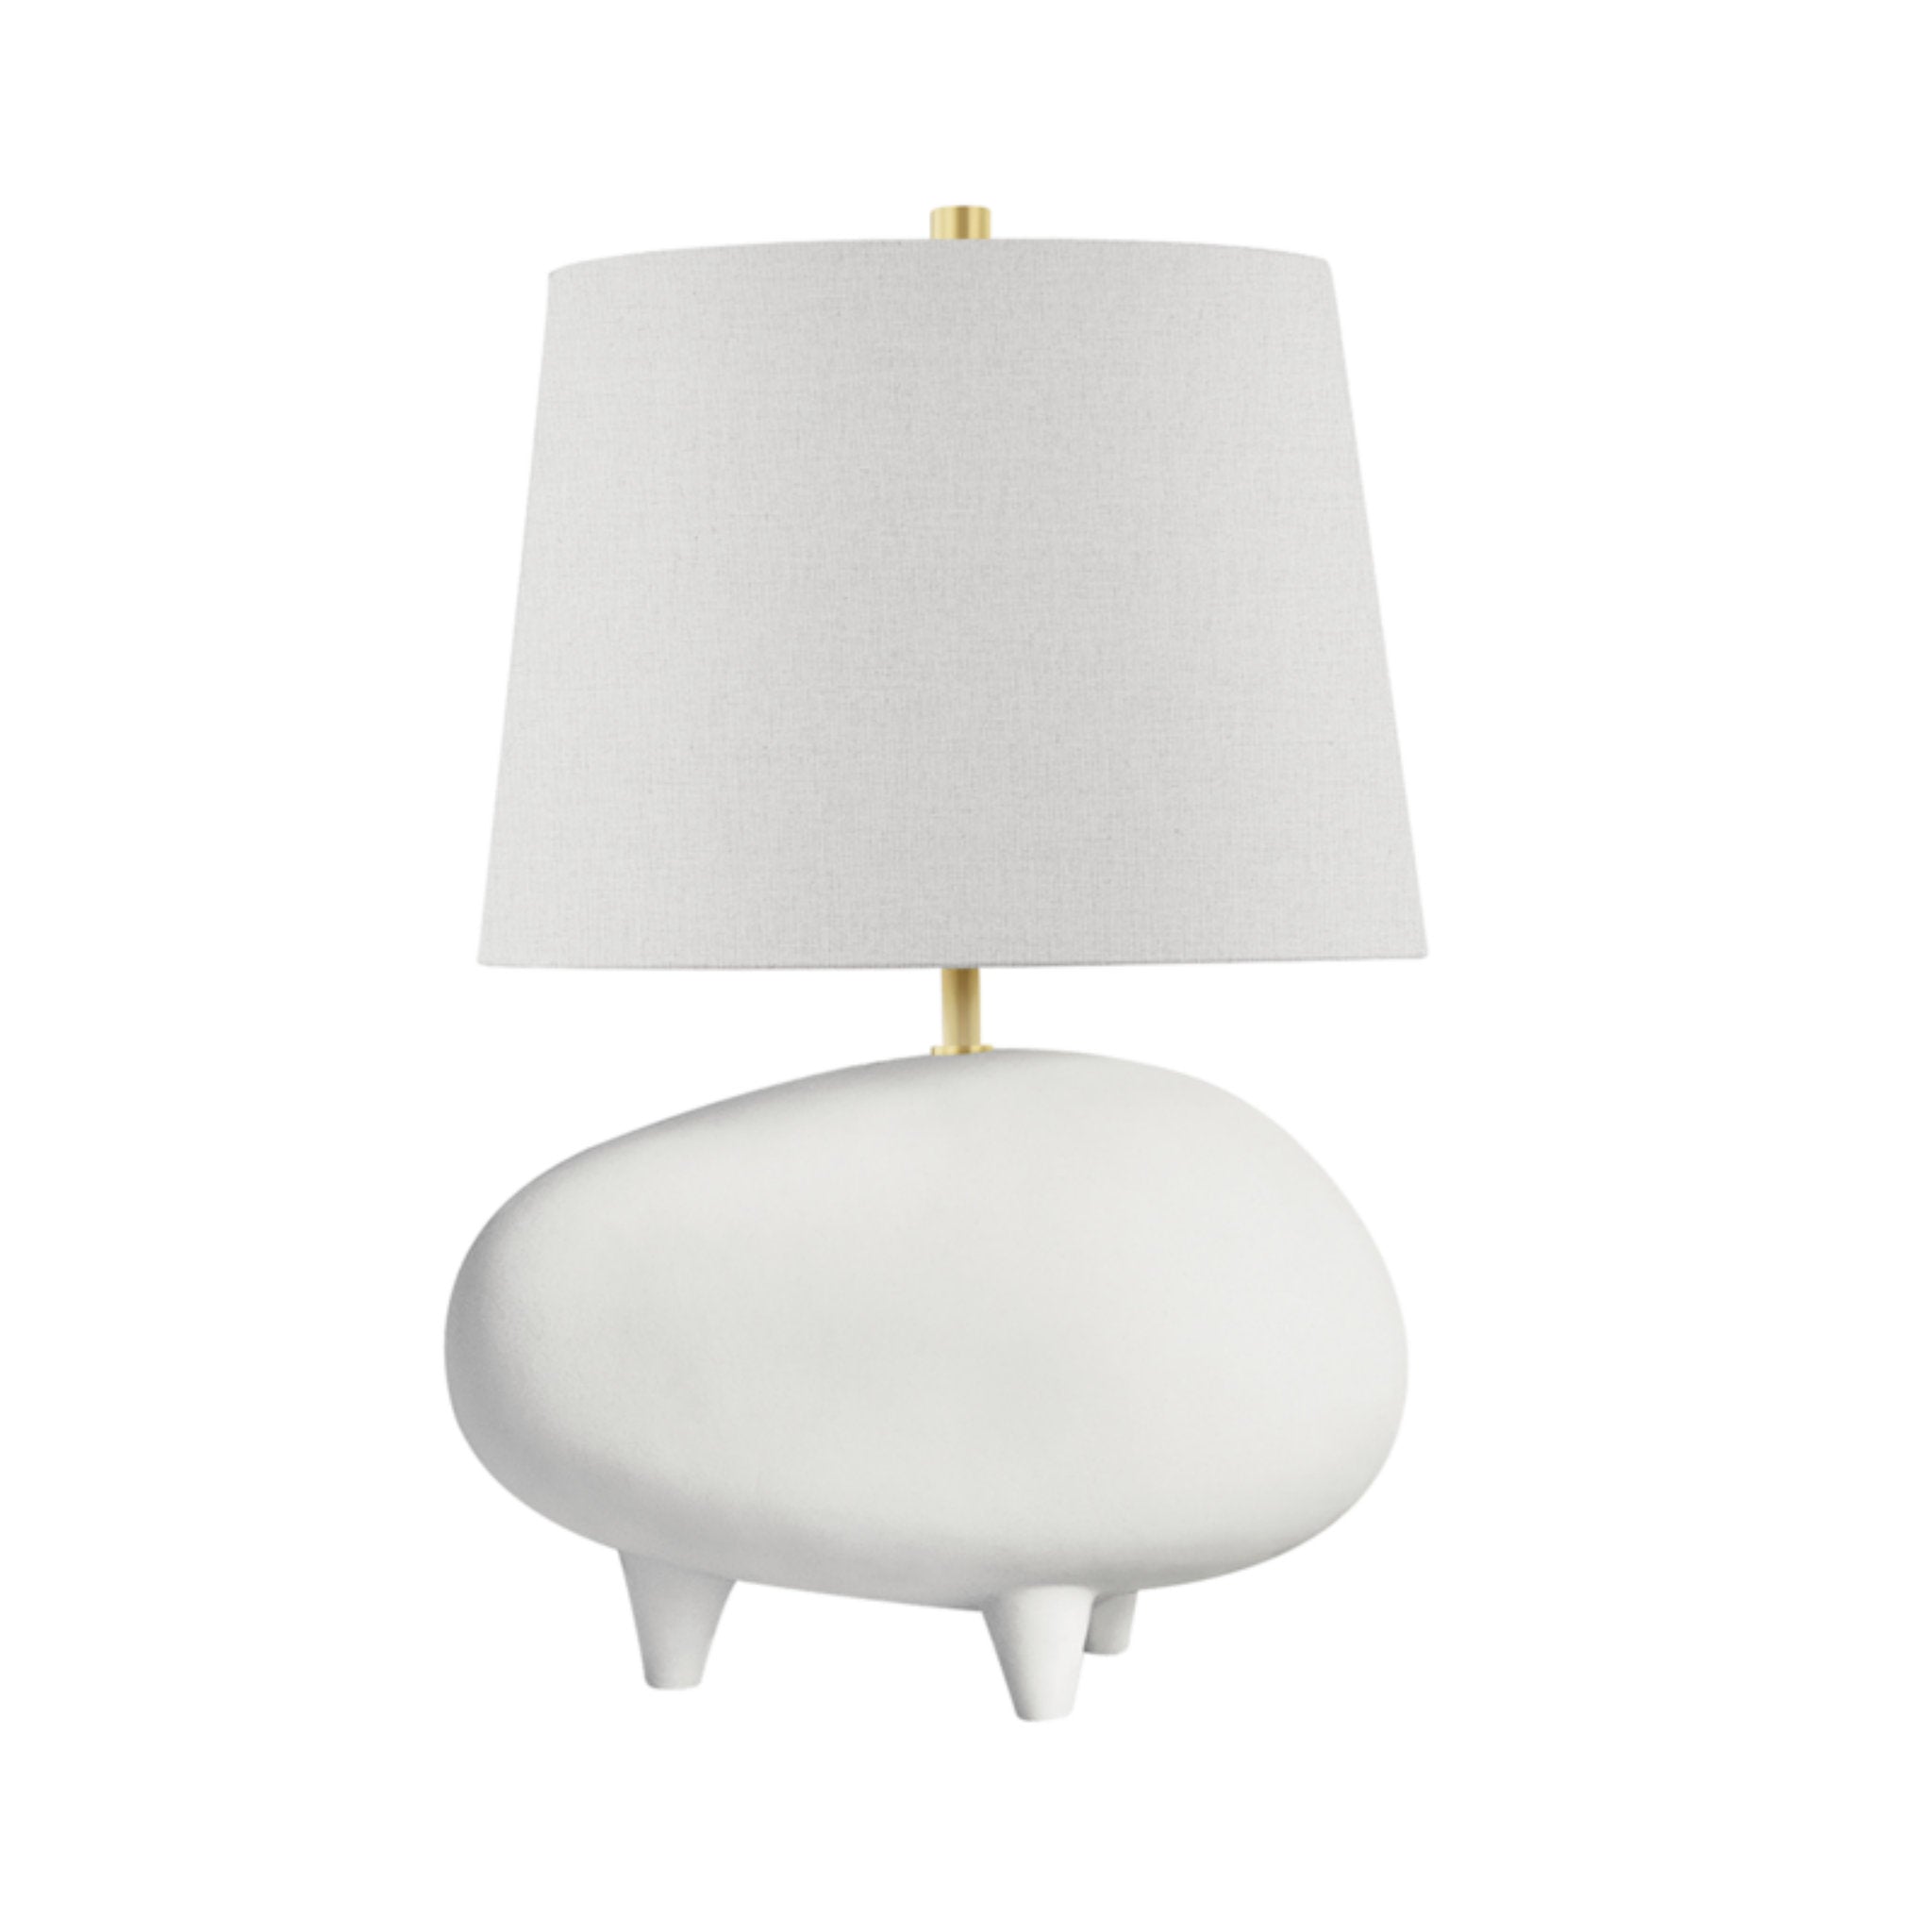 Tiptoe 1 Light Table Lamp in Aged Brass/matte White by Kelly Behun